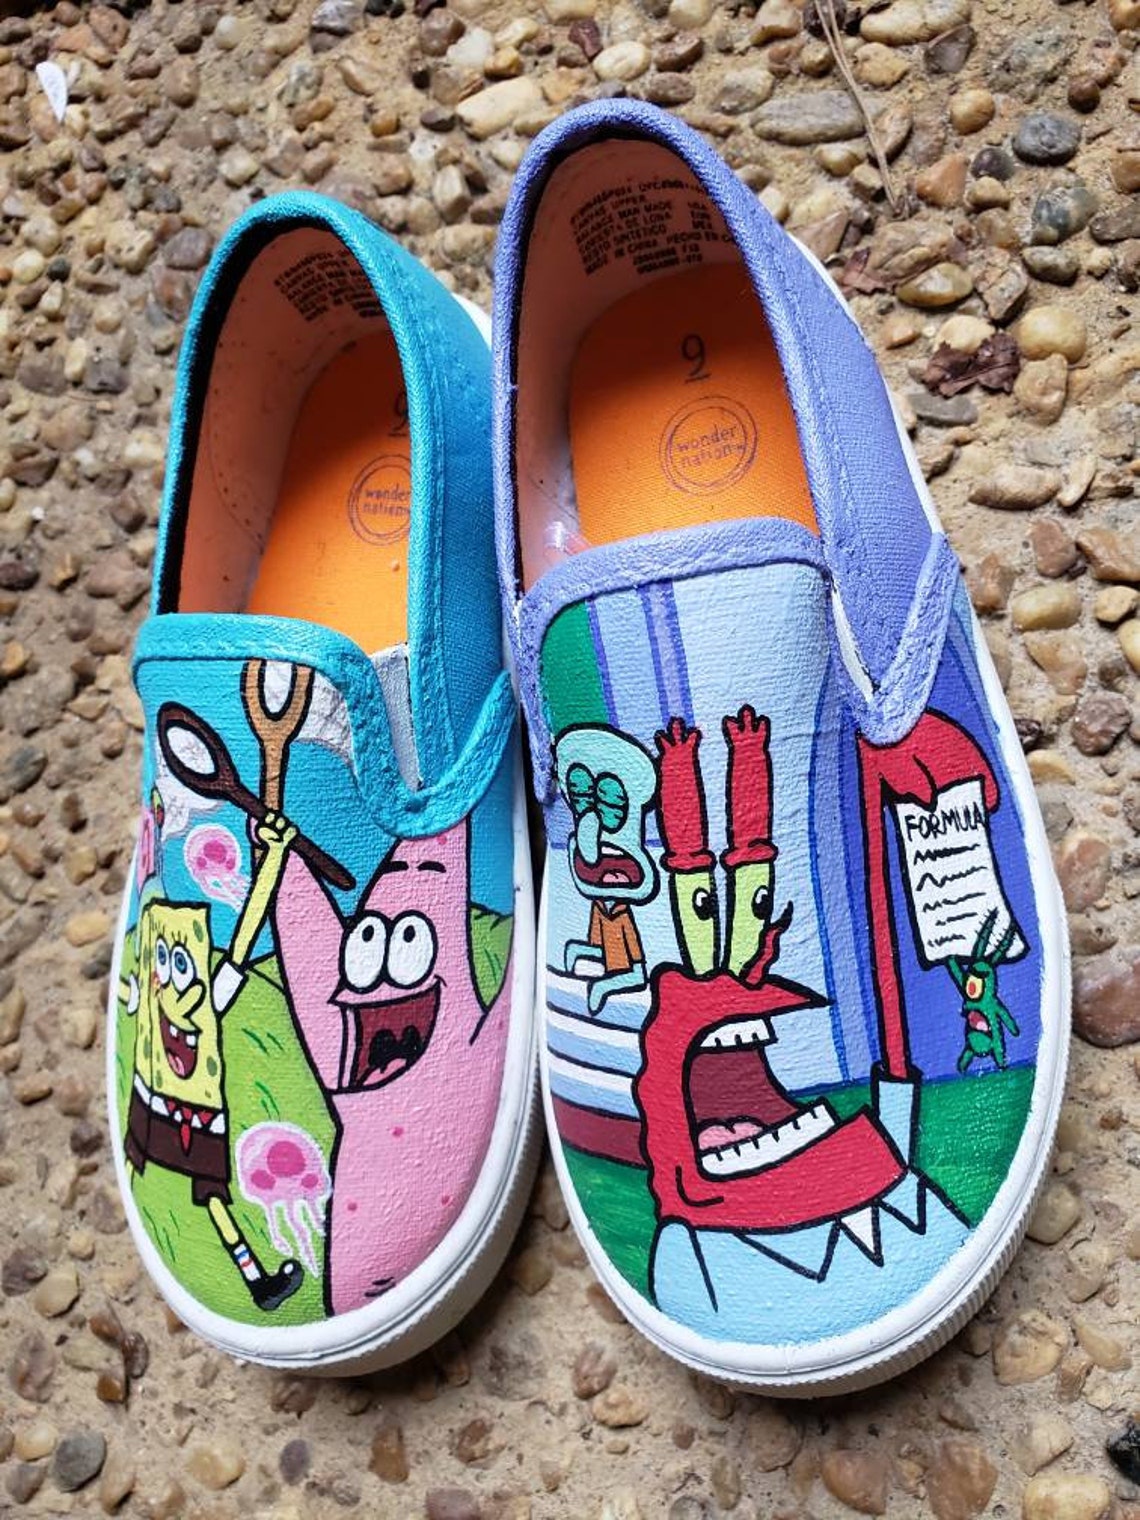 Handpainted Spongebob Shoes | Etsy